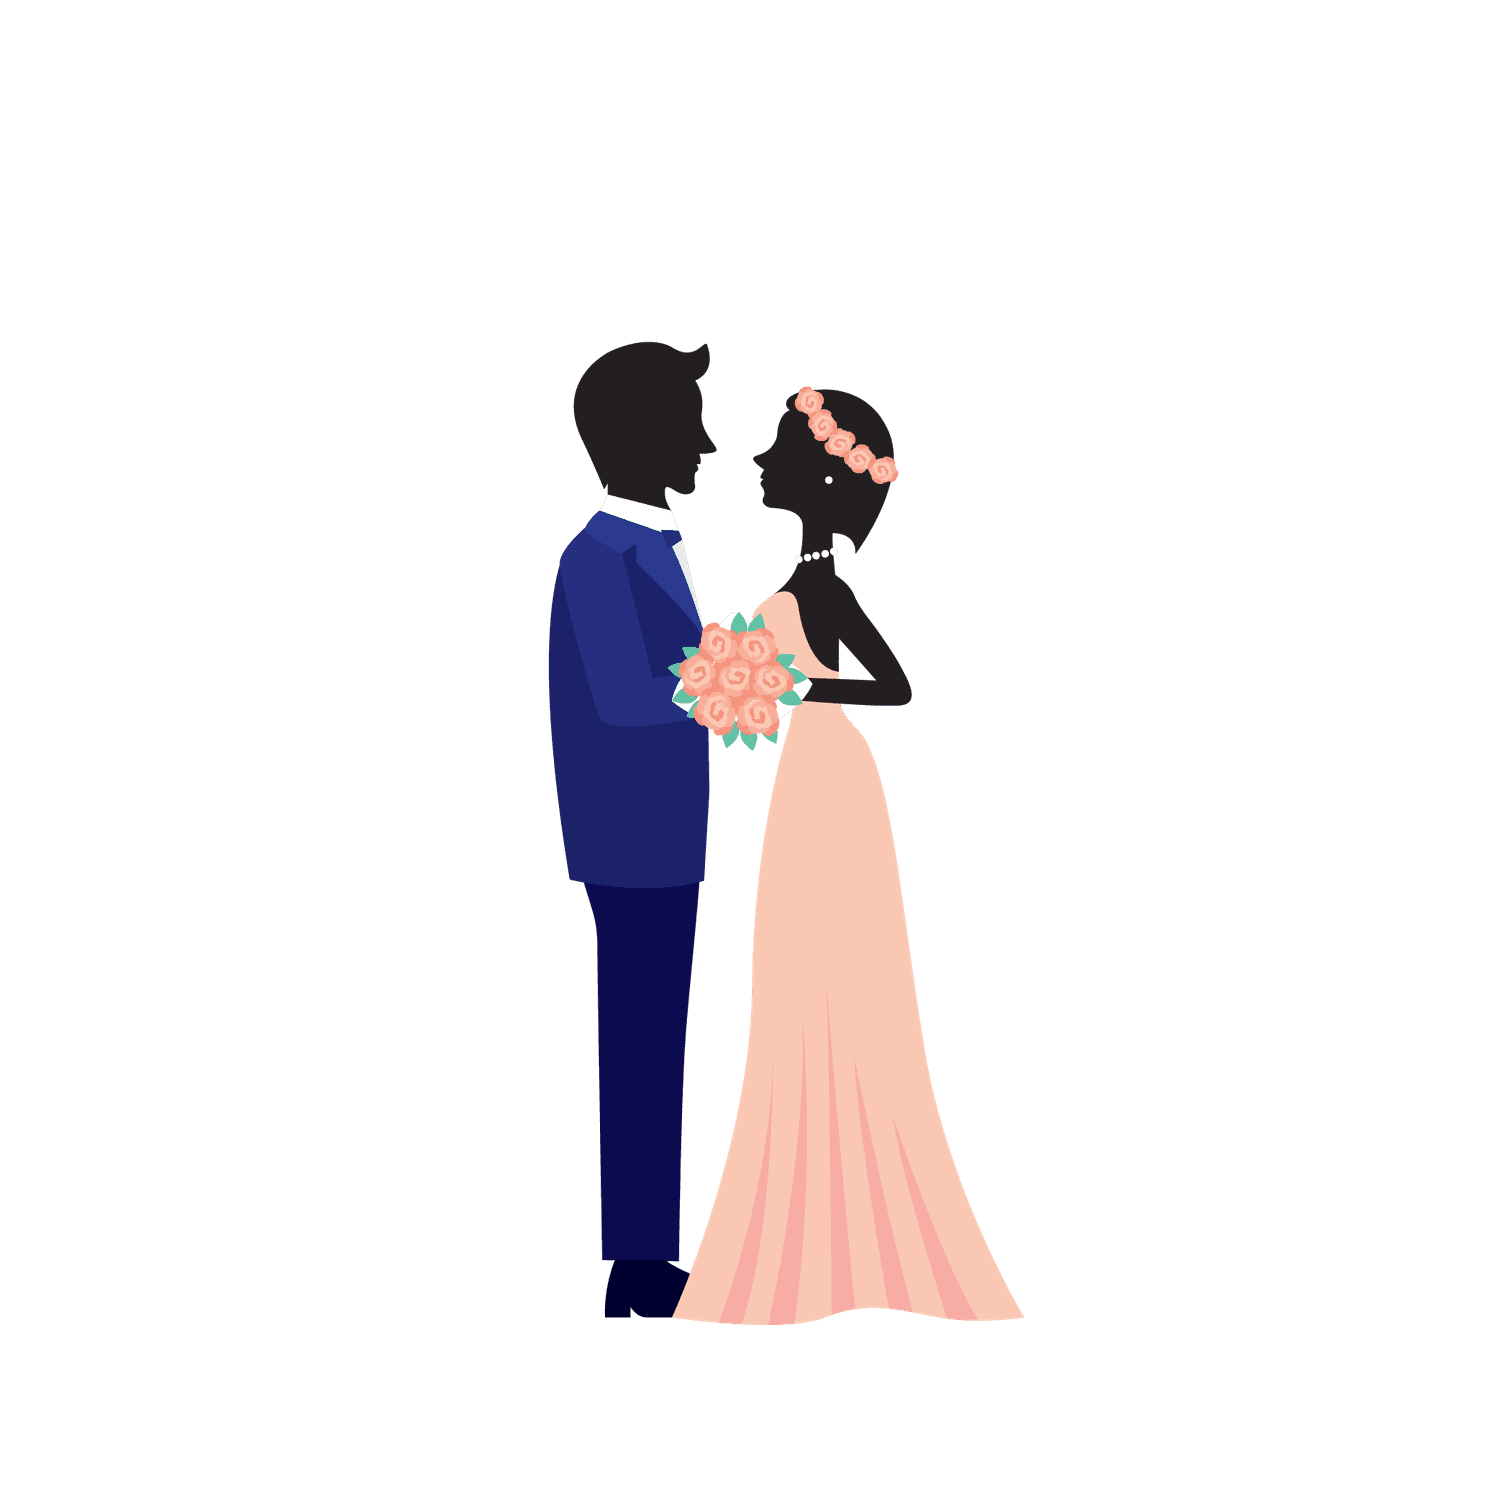 flat standing wedding couples illustration